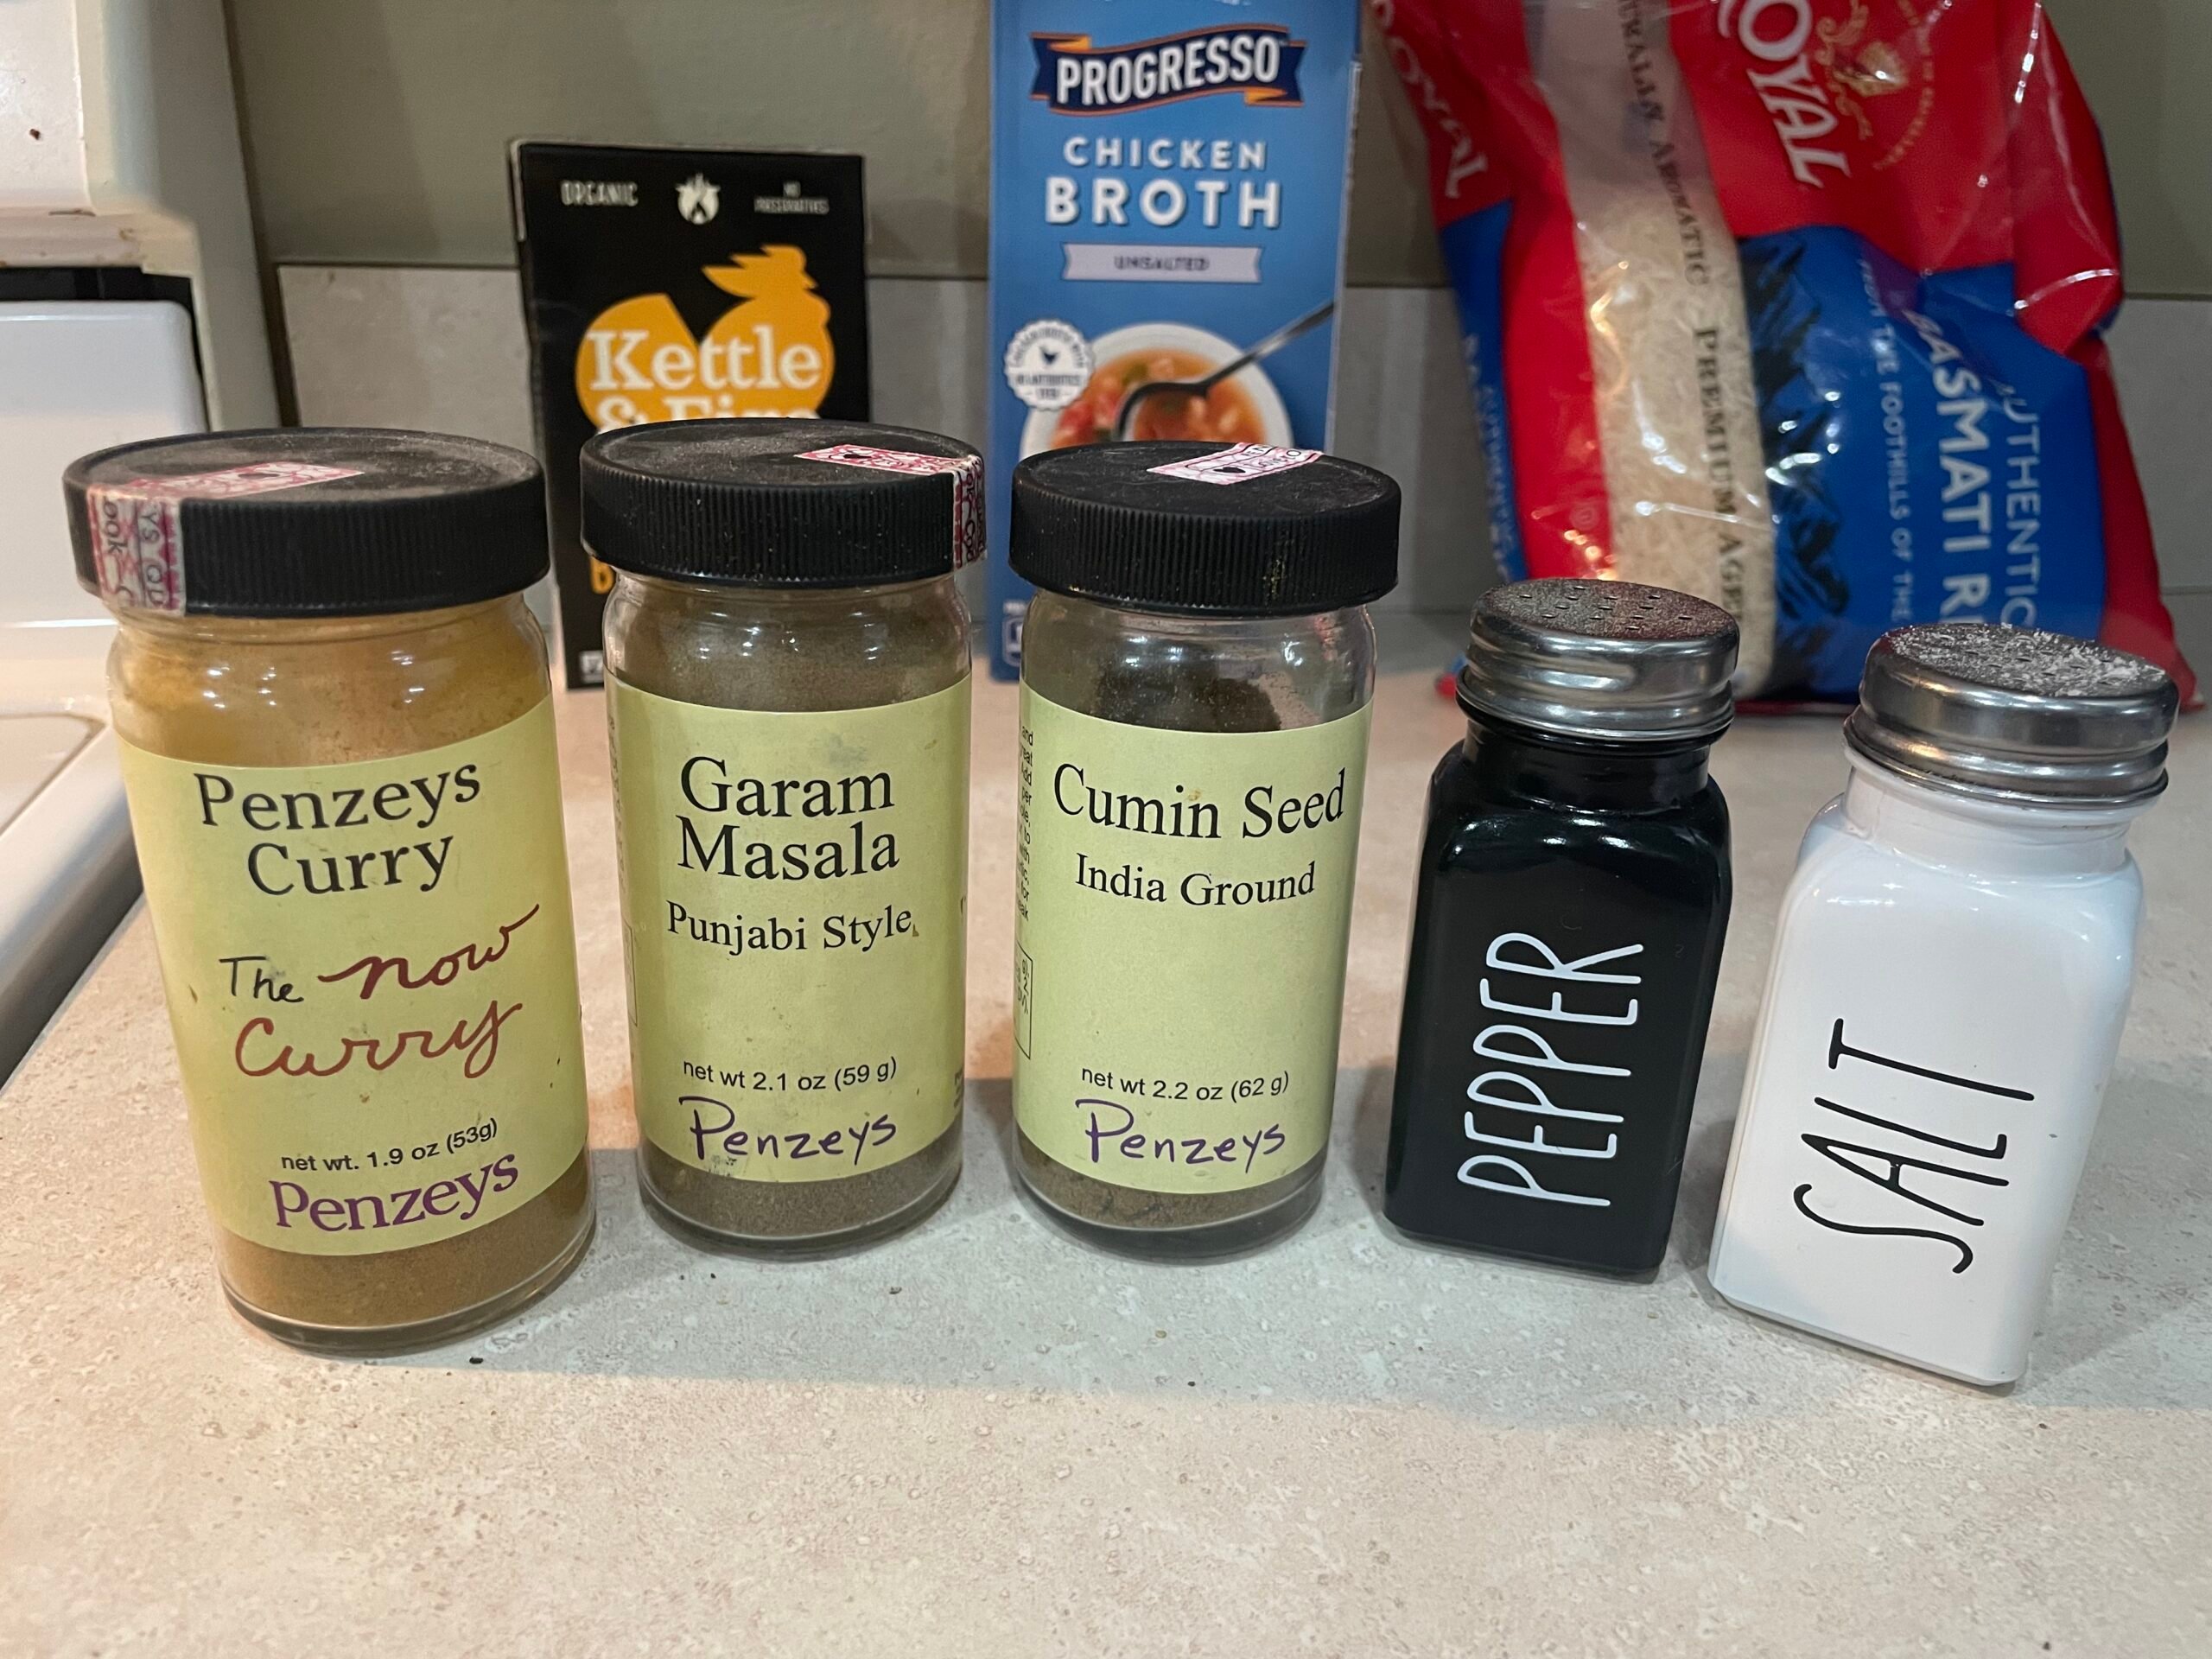 salt, pepper and seasonings such as curry powder, garam masala, and cumin